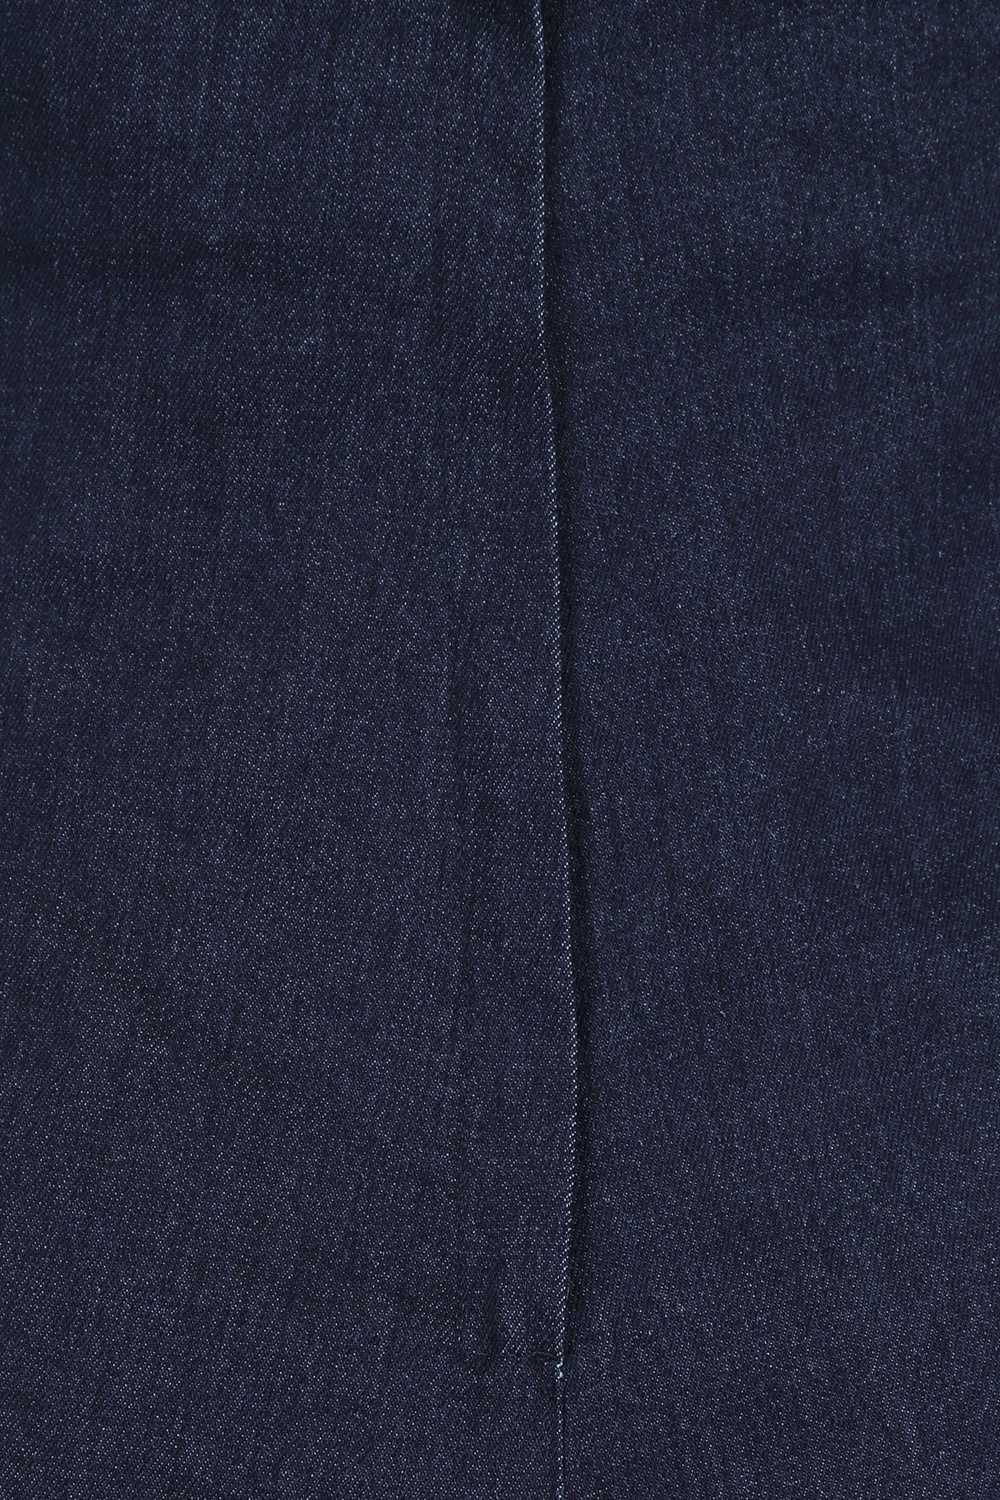 Collectif Clothing - Kiki jeans met hoge taille in marineblauw 4